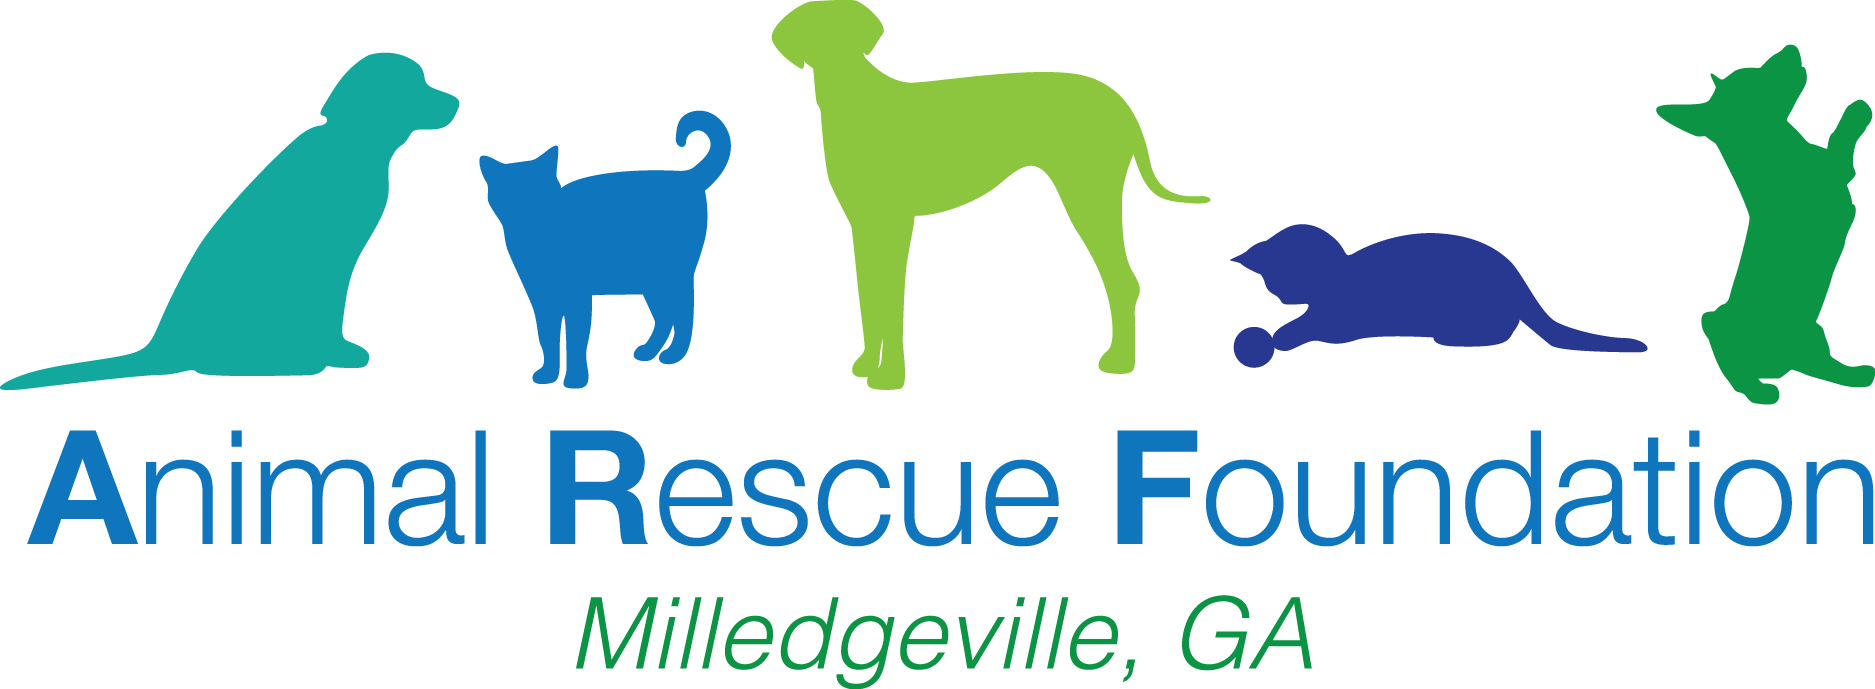 Animal Rescue Foundation, Inc.